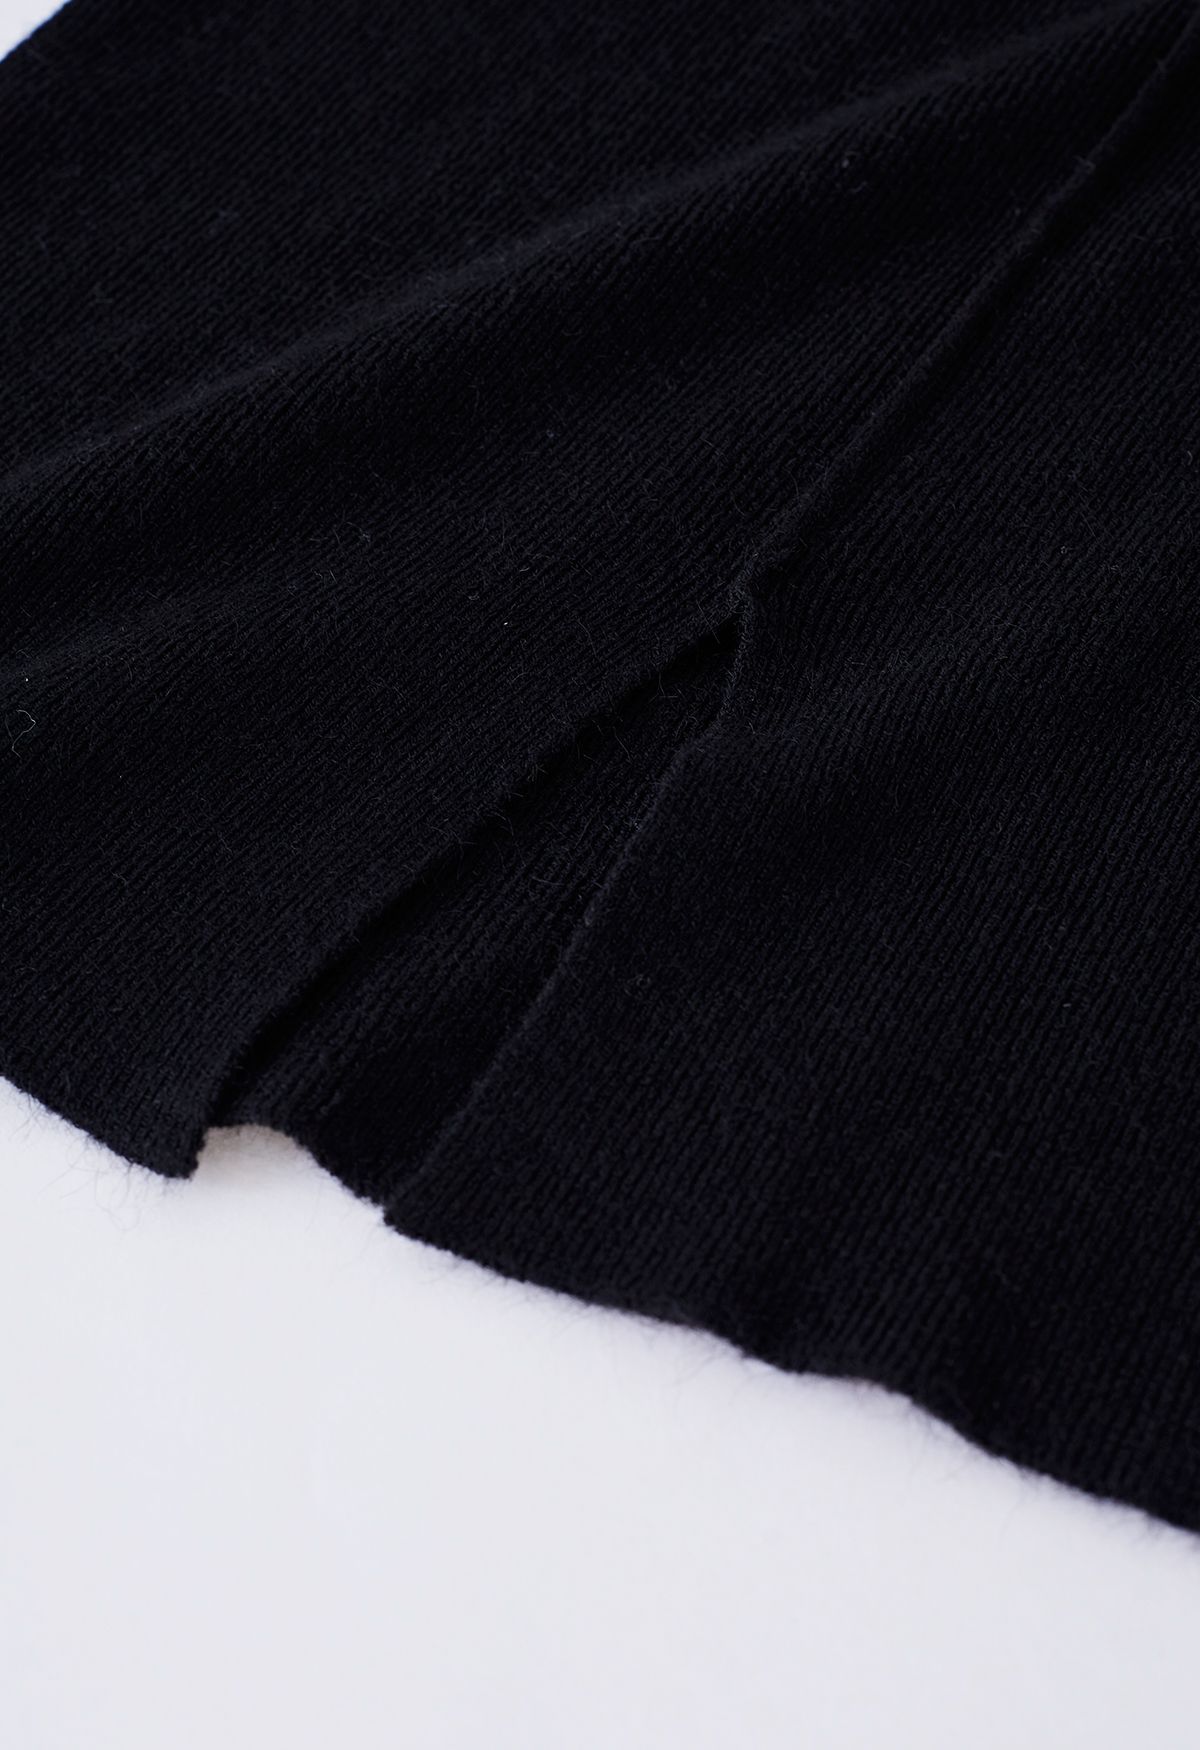 Seam Detail High Neck Slit Knit Top in Black